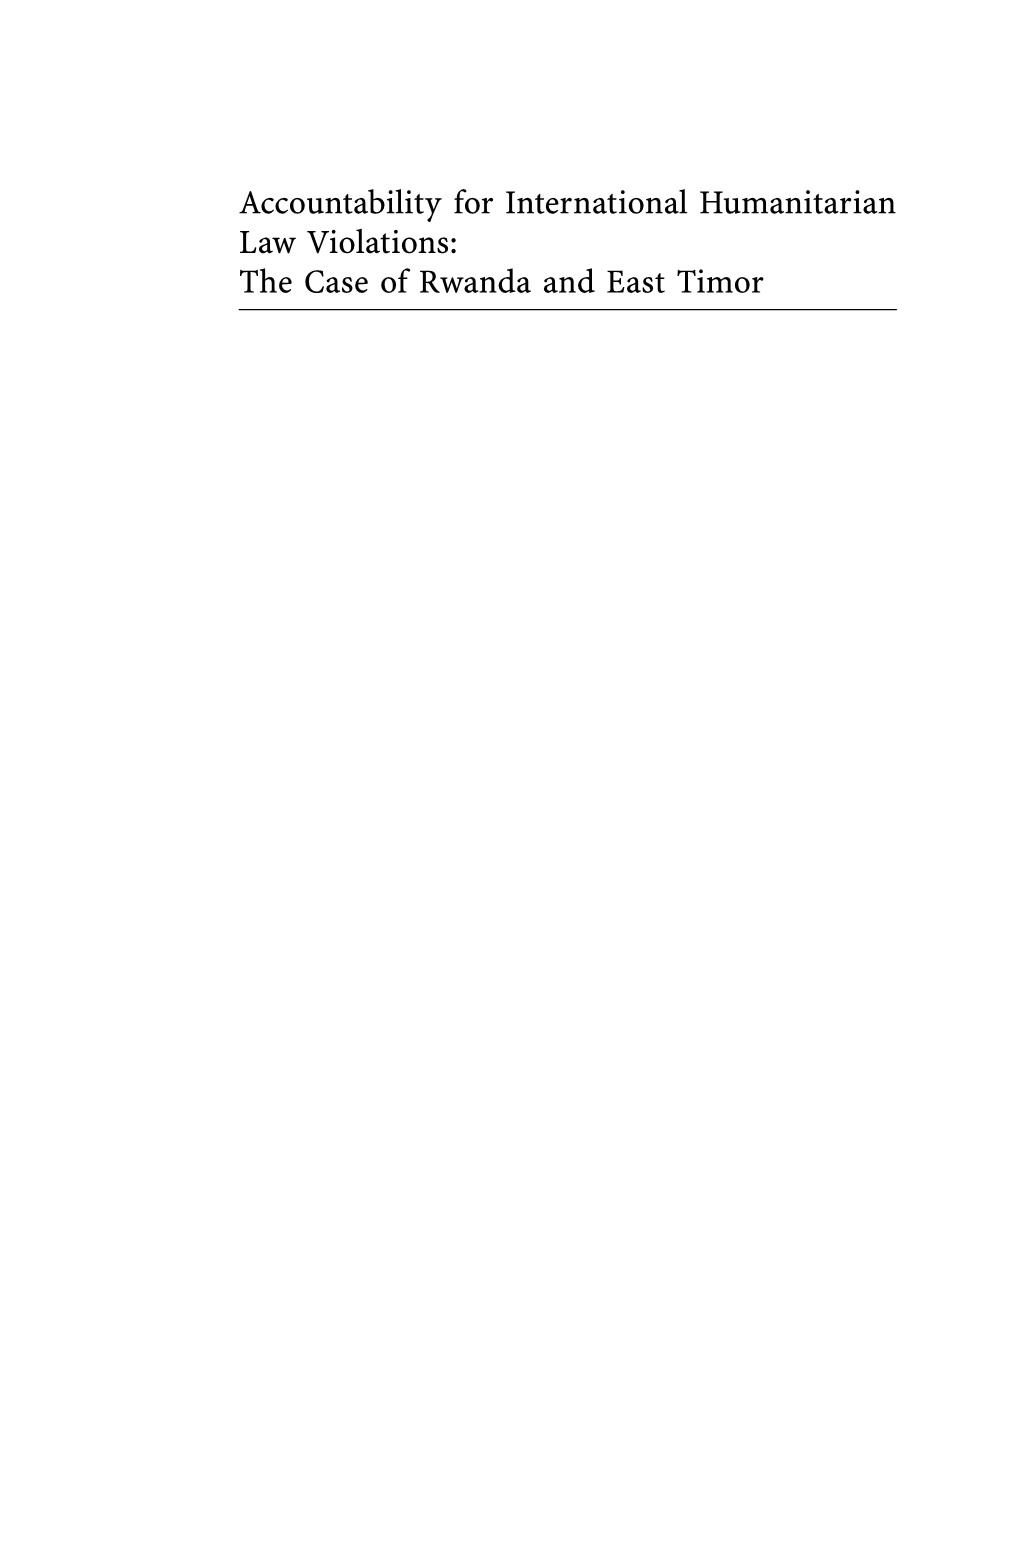 The Case of Rwanda and East Timor Accountability for International